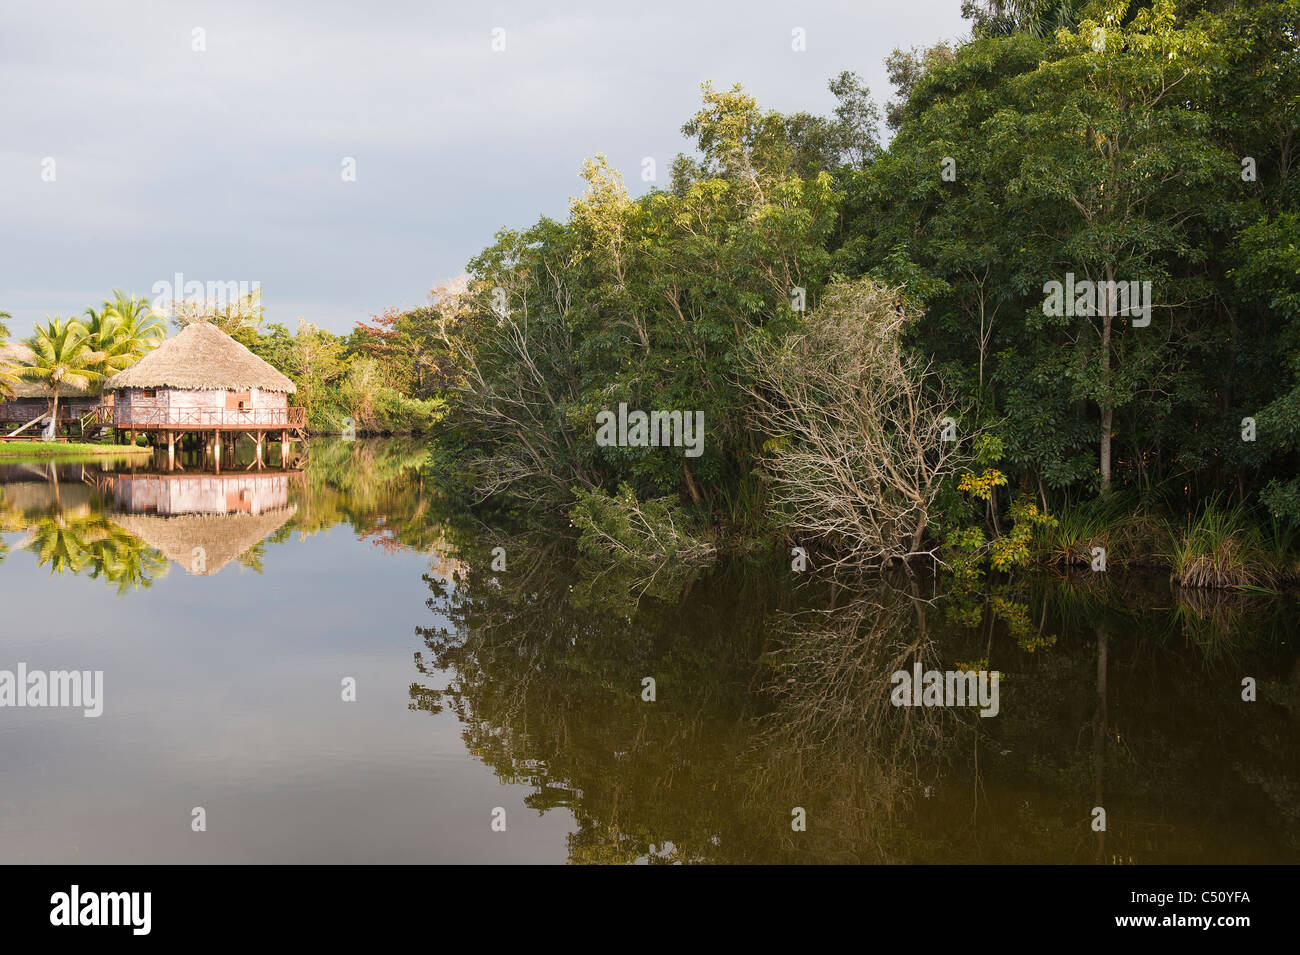 Laguna del Tesoro, Treasure Lagoon, Palm trees and wooden cabins, Zapata Peninsula, Cuba Stock Photo